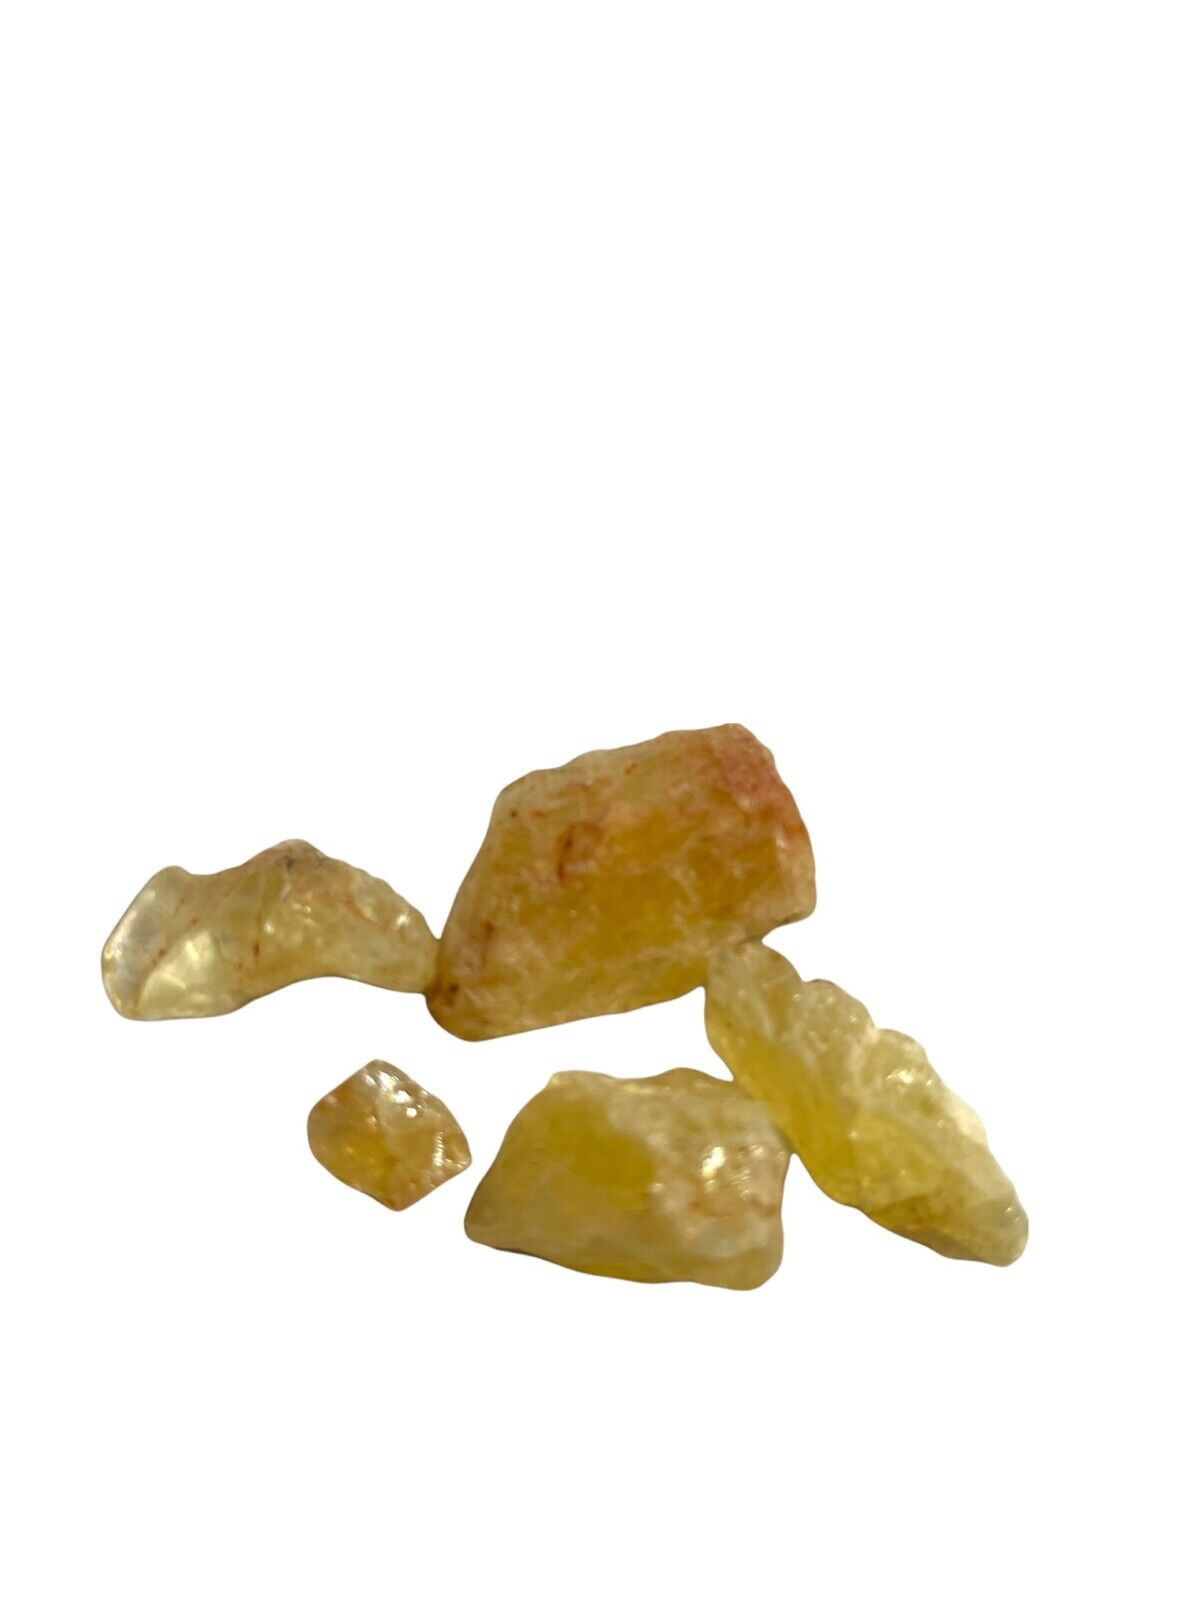 Gold Danburite Chips Tanzania 9 grams 5-20mm Very Small Reiki Healing Crystals 